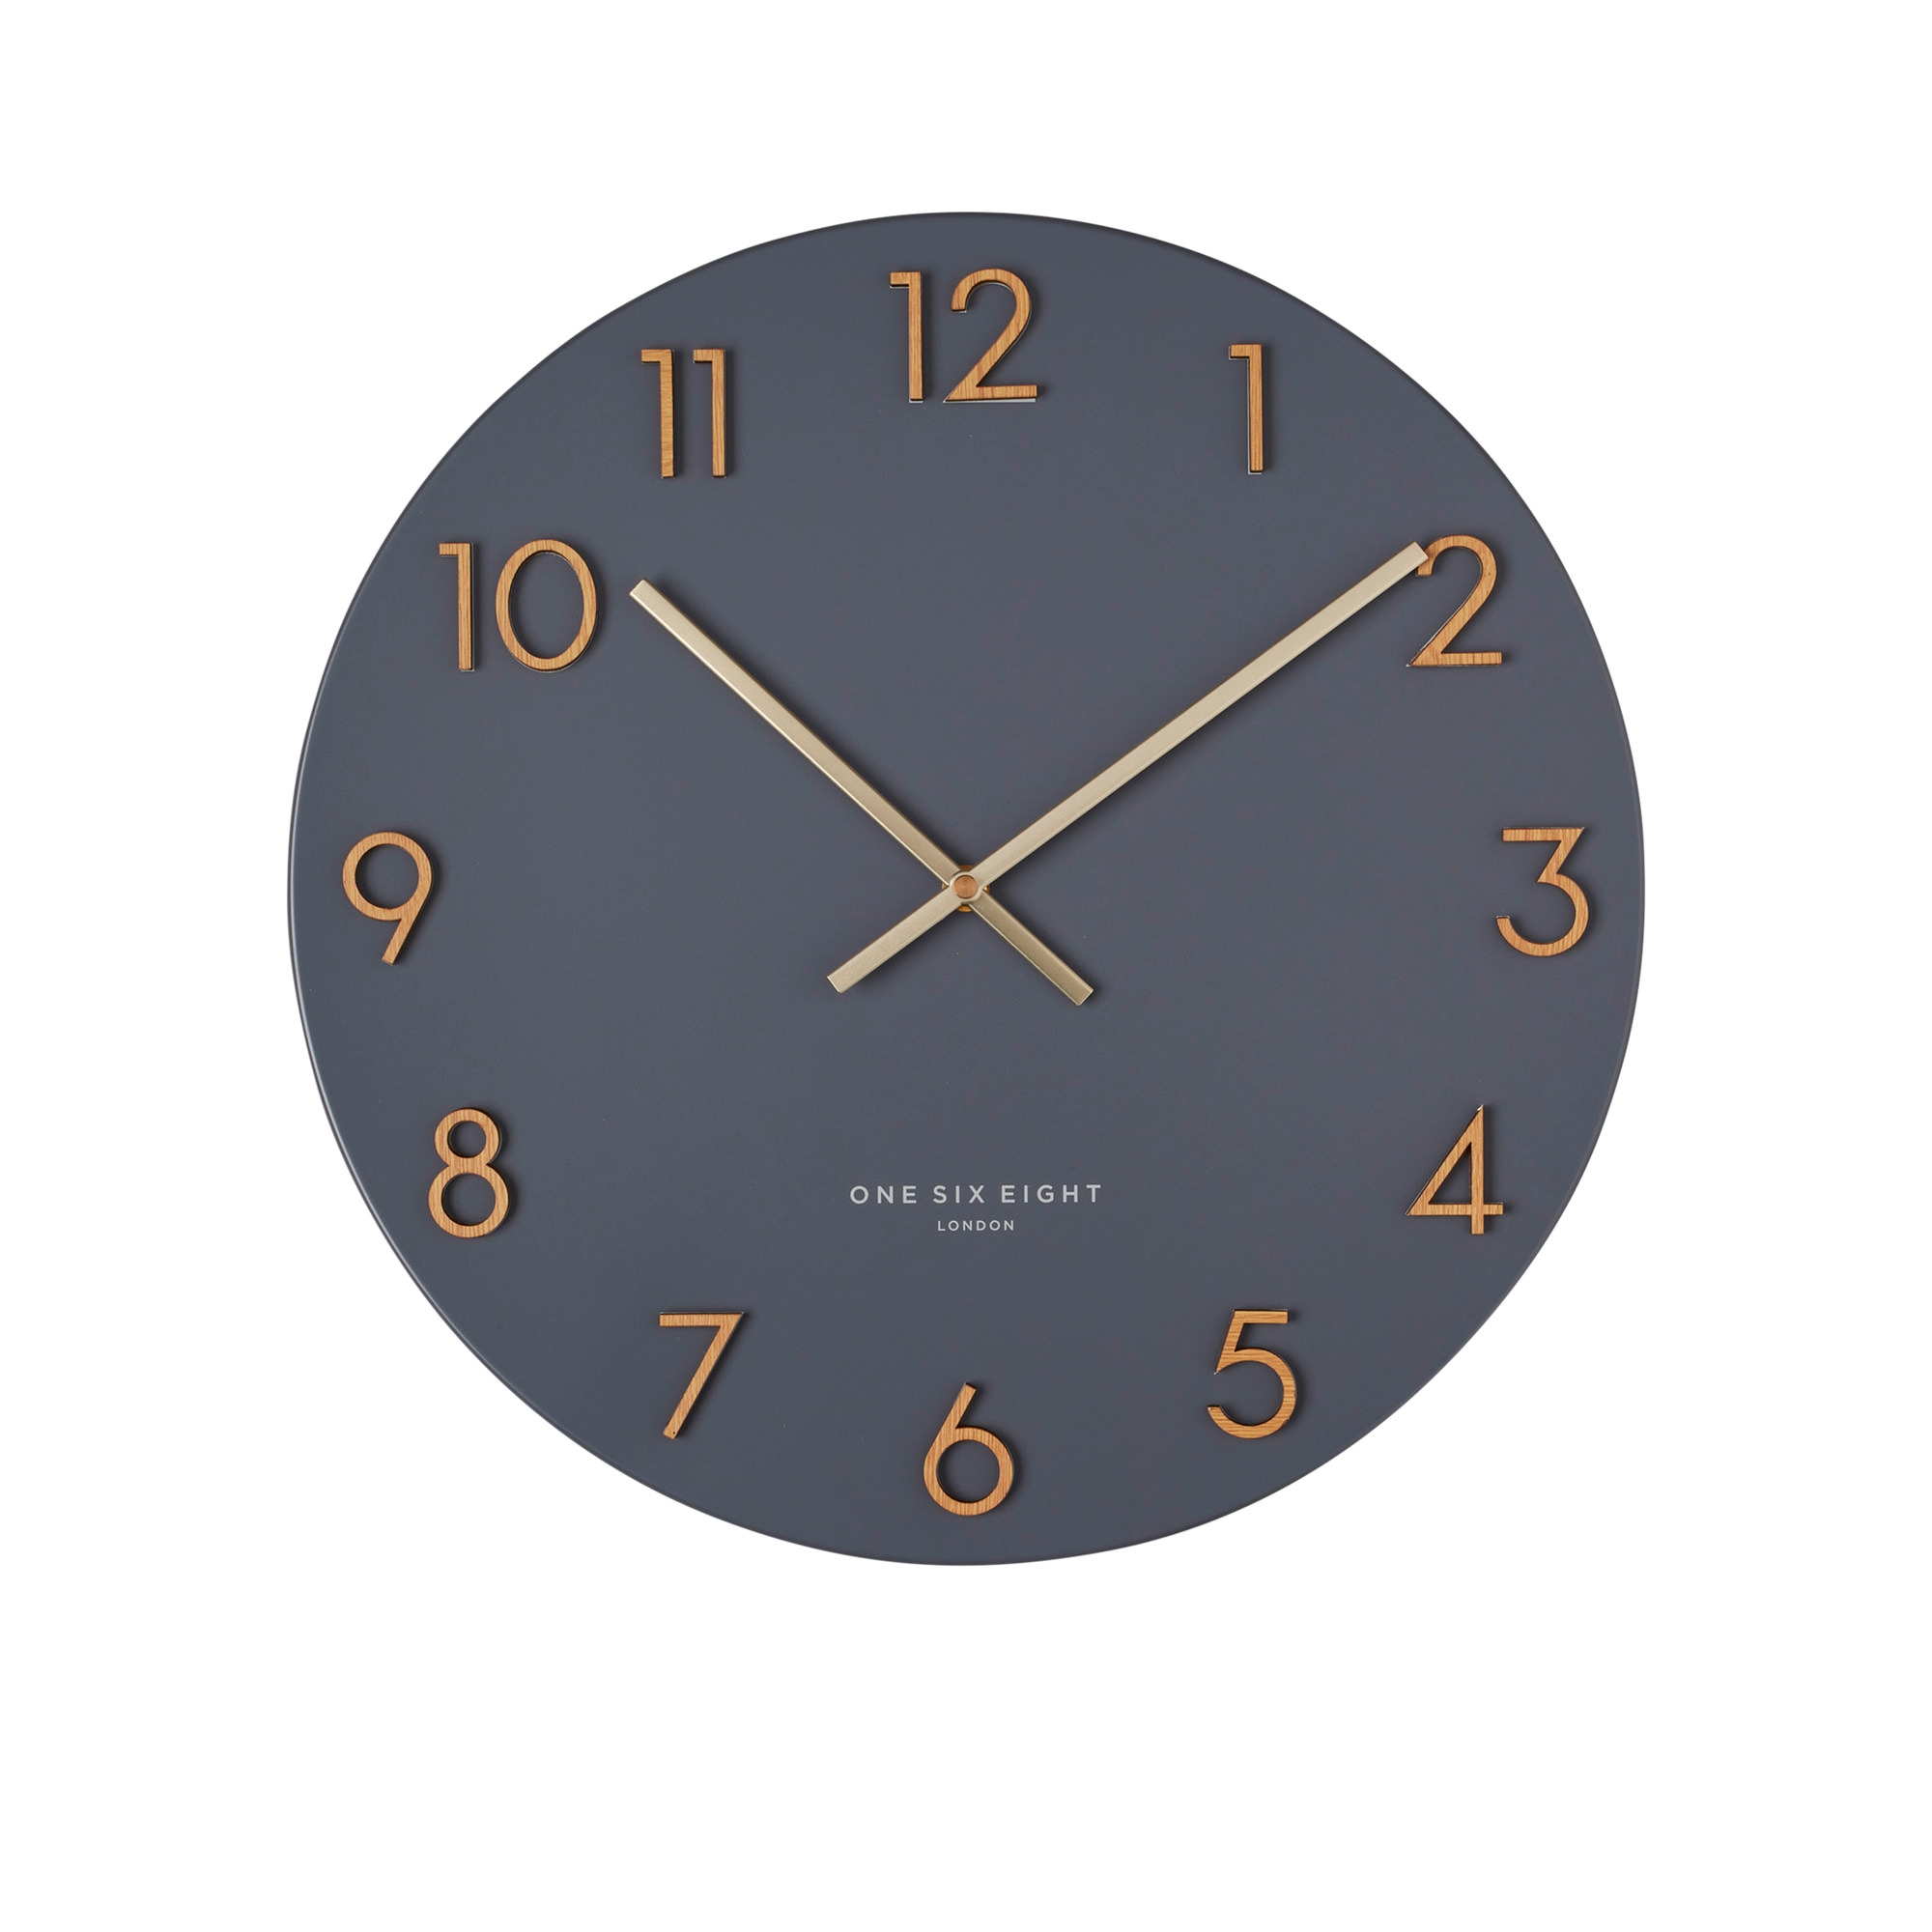 One Six Eight London Katelyn Metal Wall Clock 40cm Charcoal Grey Image 1